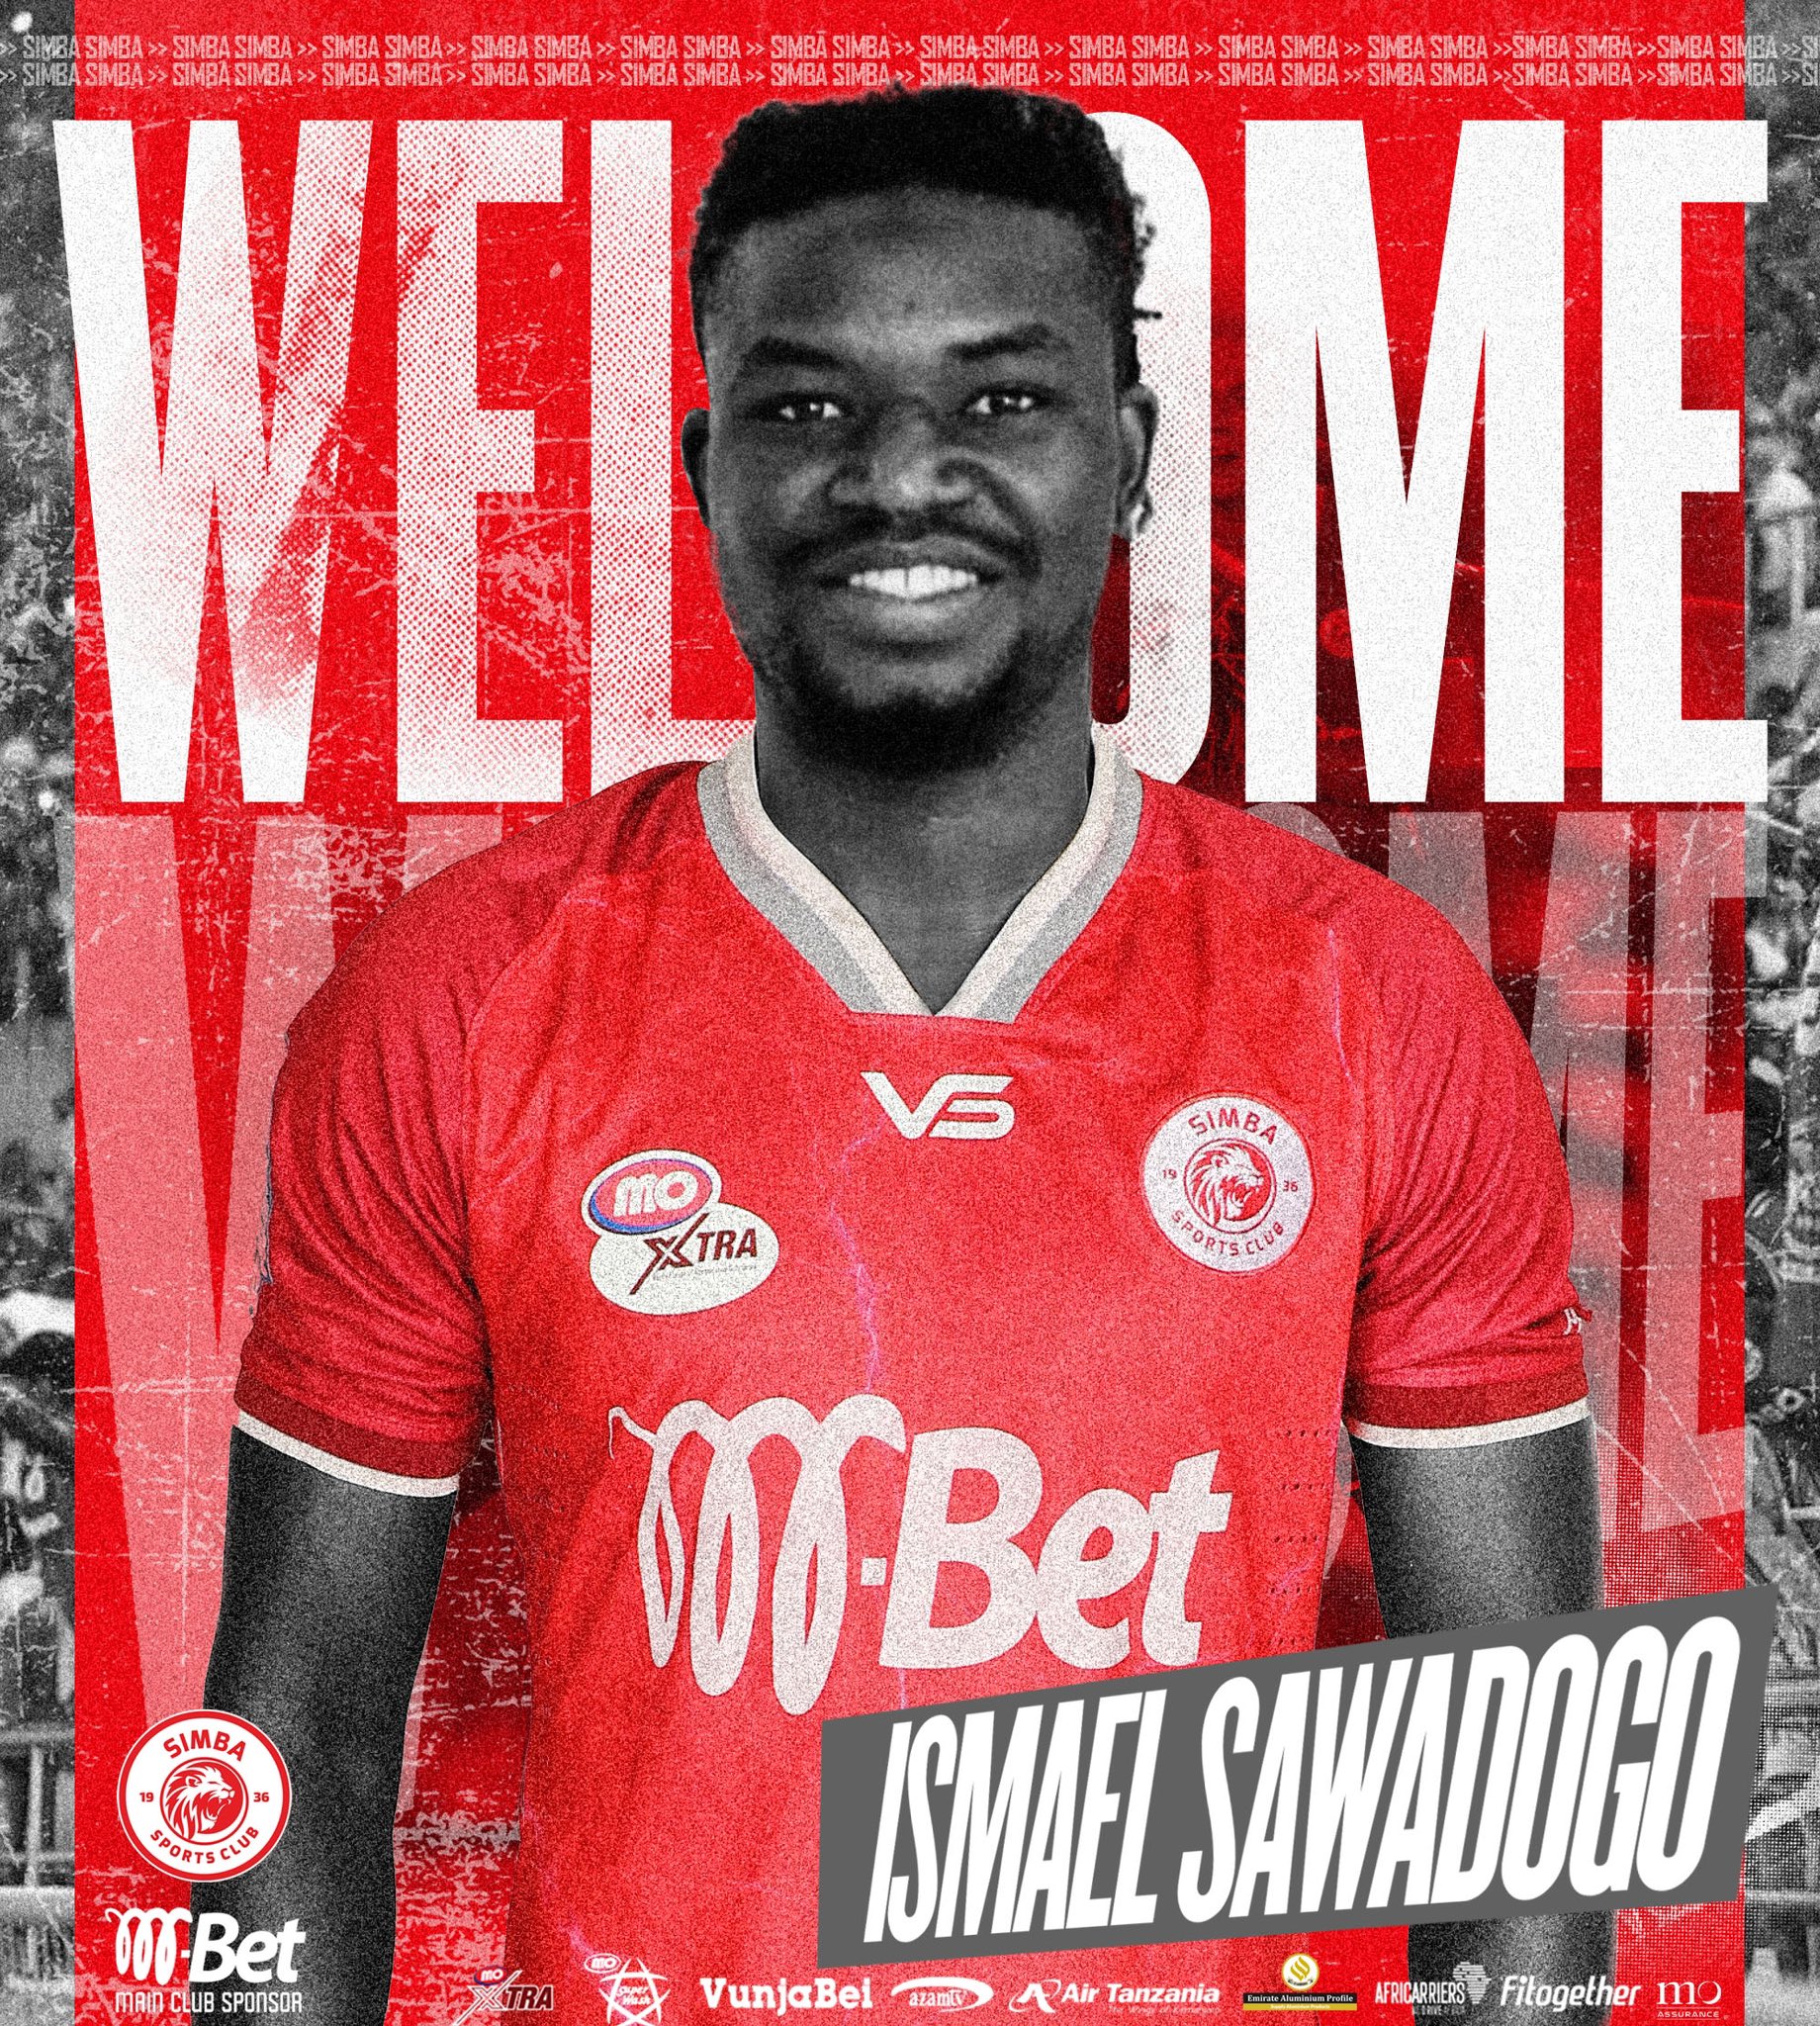 Cv Ya Ismail Sawadogo New Simba Player